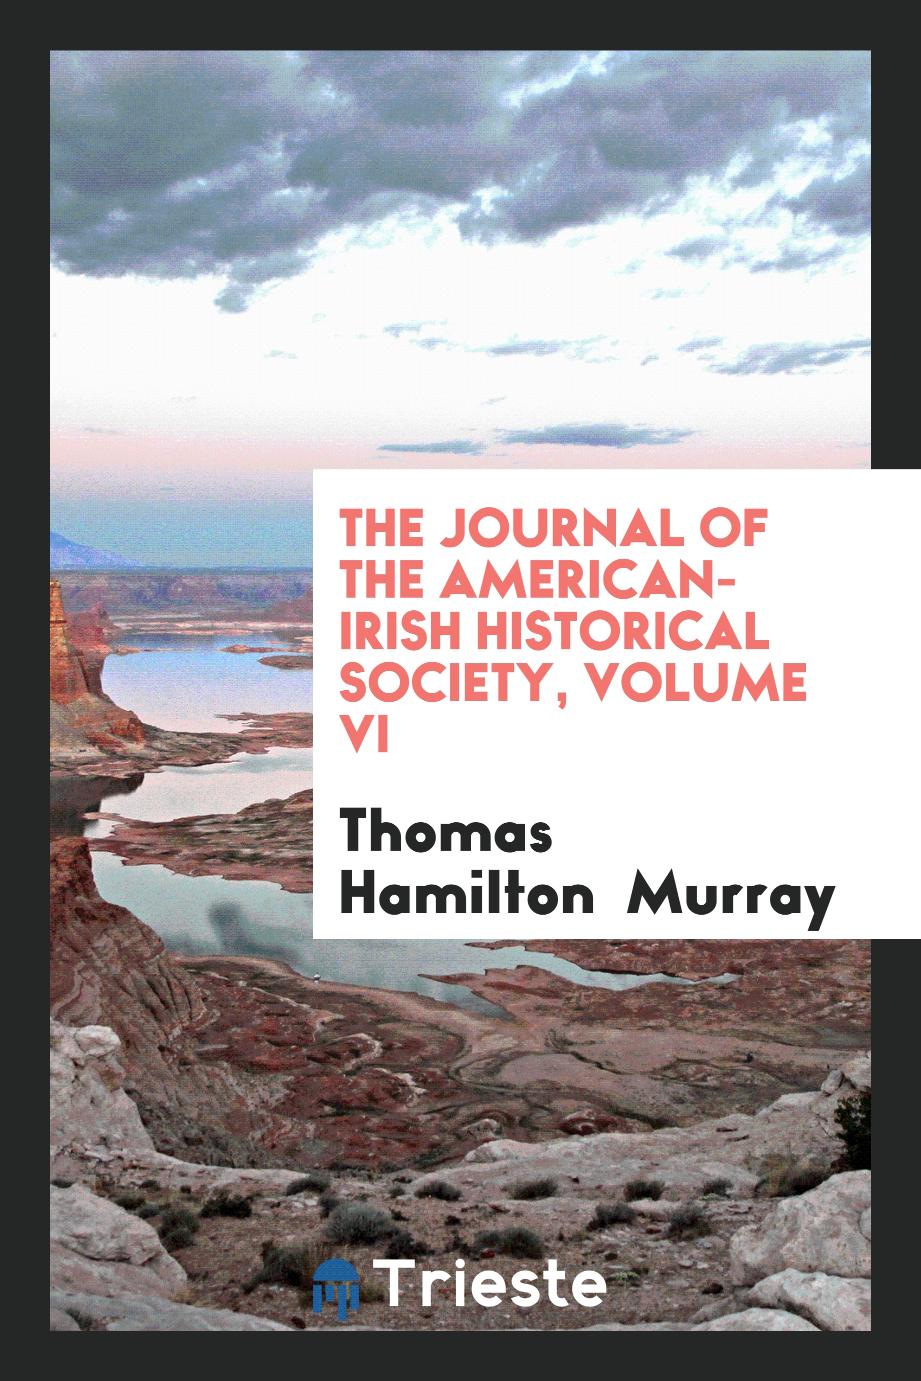 The Journal of the American-Irish Historical Society, Volume VI